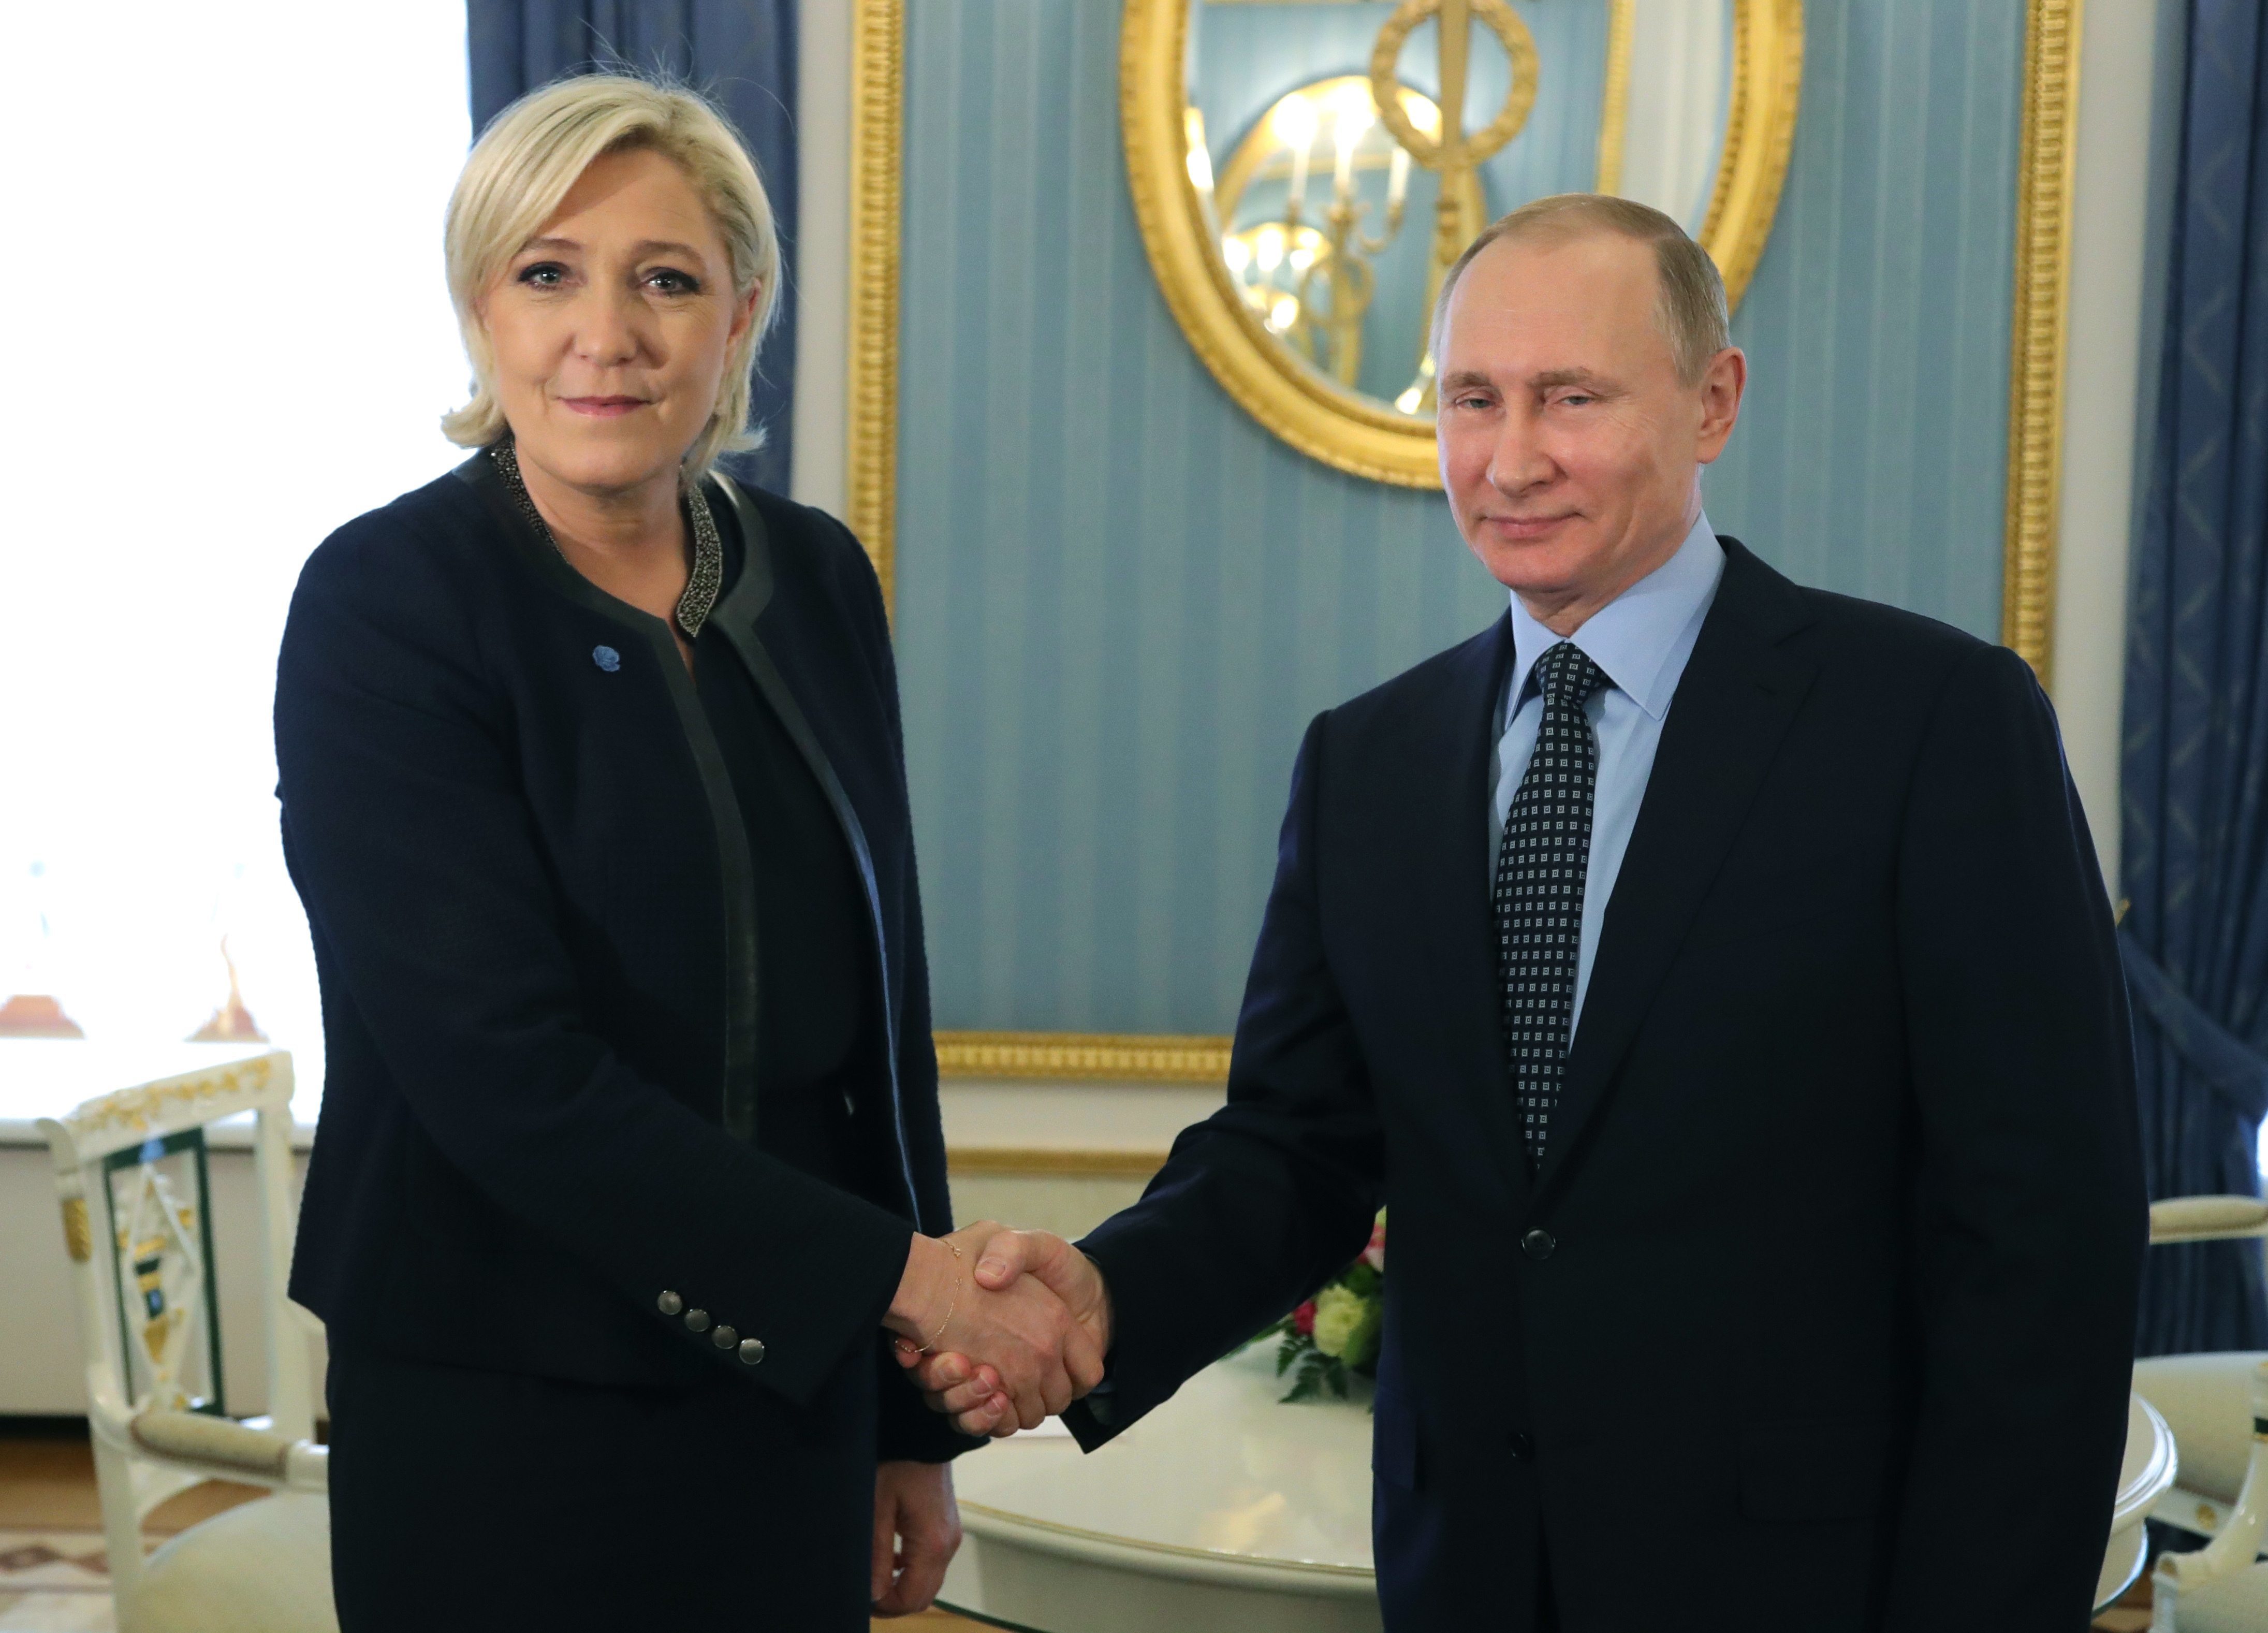 Marine Le Pen Doesn't Oppose France Leaving European Union